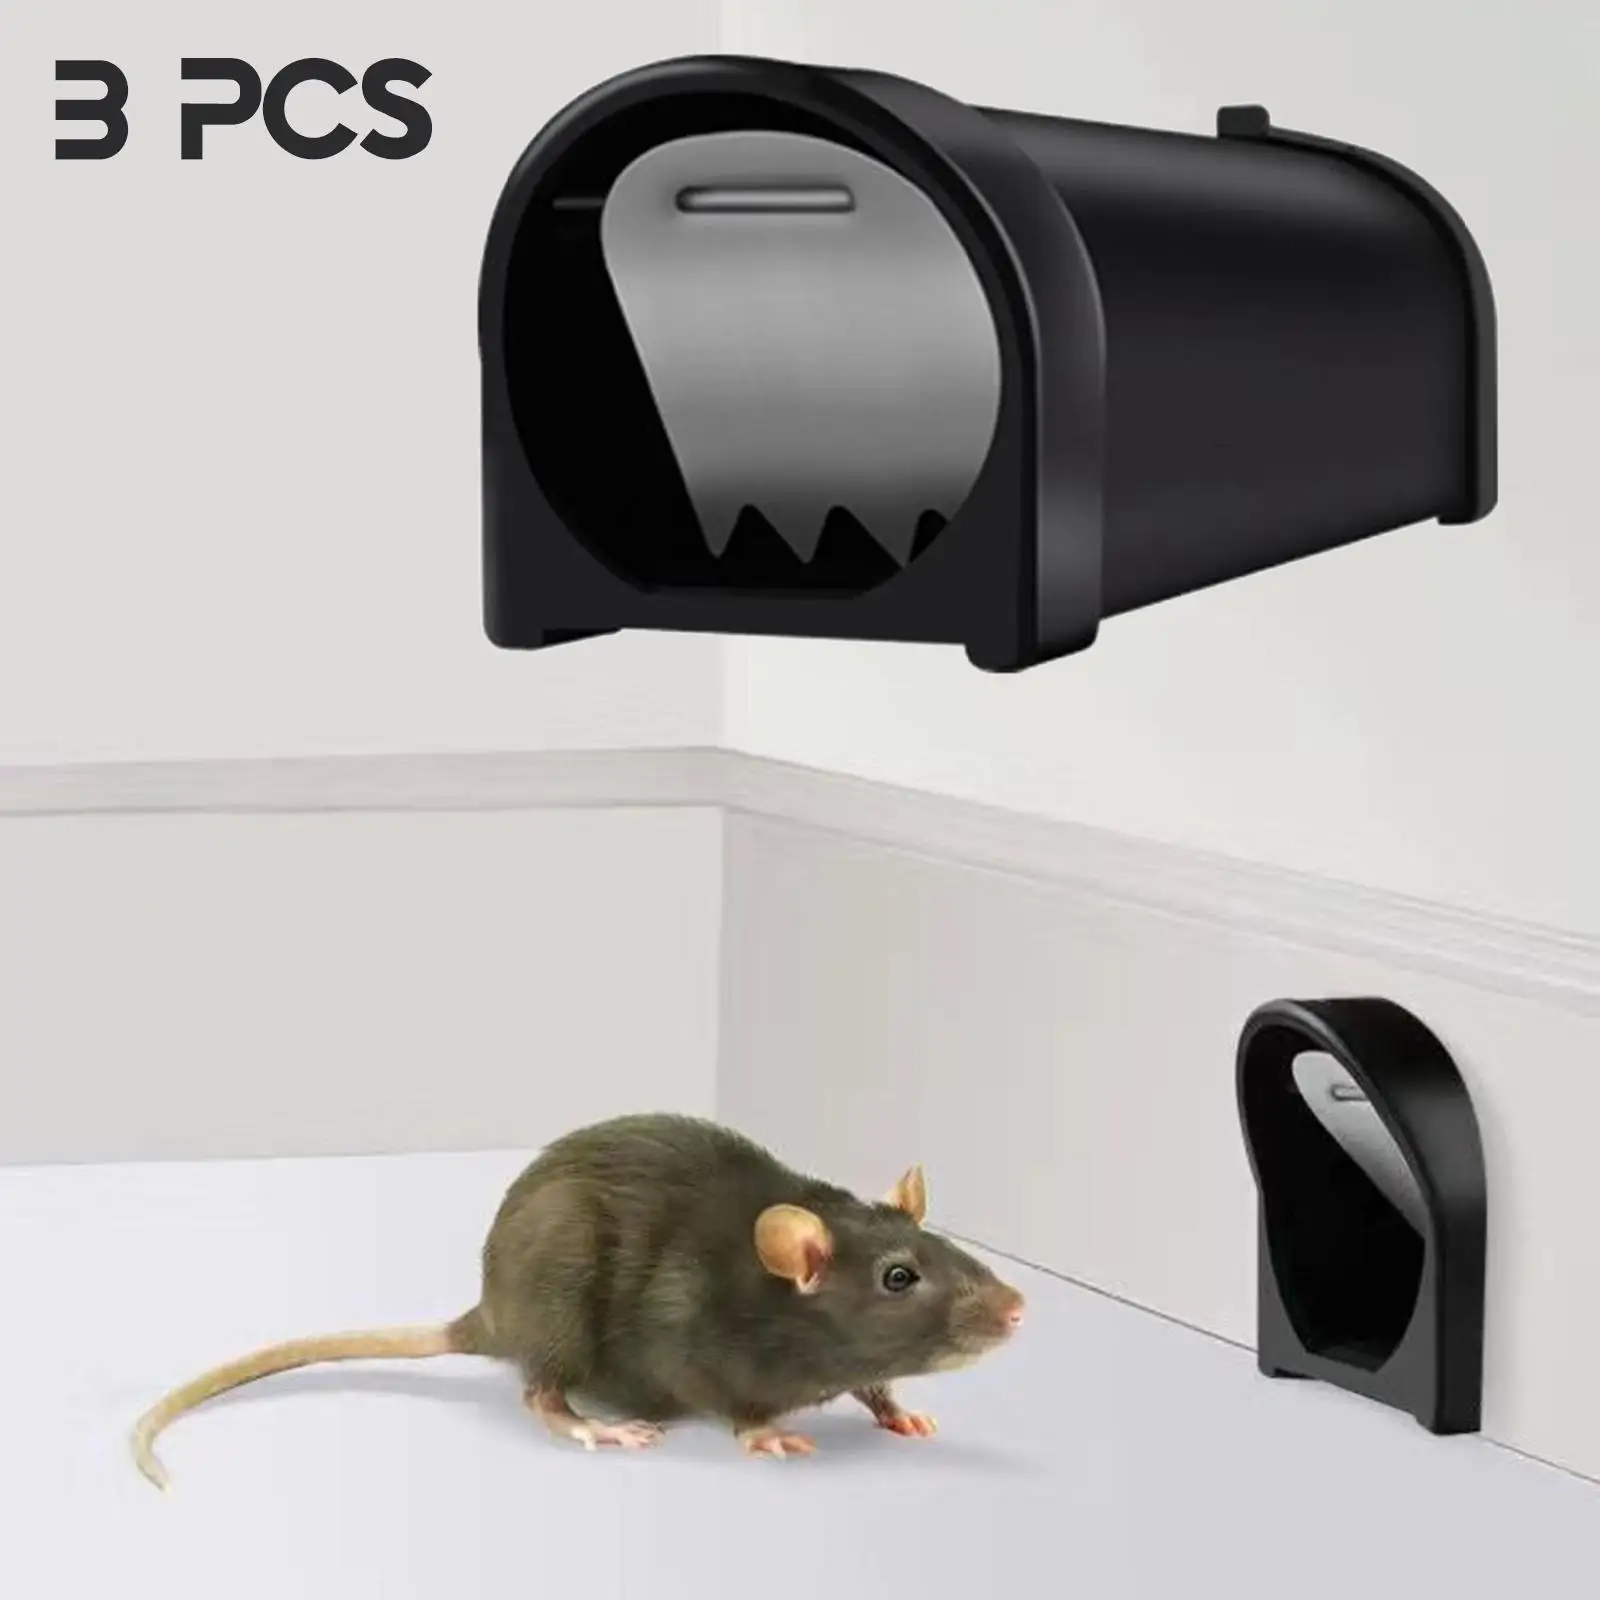 https://ae01.alicdn.com/kf/Sfd2a51021ad54c10abf4883b7551d22fS/3x-Humane-Mouse-Traps-Smart-Reusable-Mousetrap-Rat-Catcher-No-Killing-catch-and-release-Mice-Cage.jpg